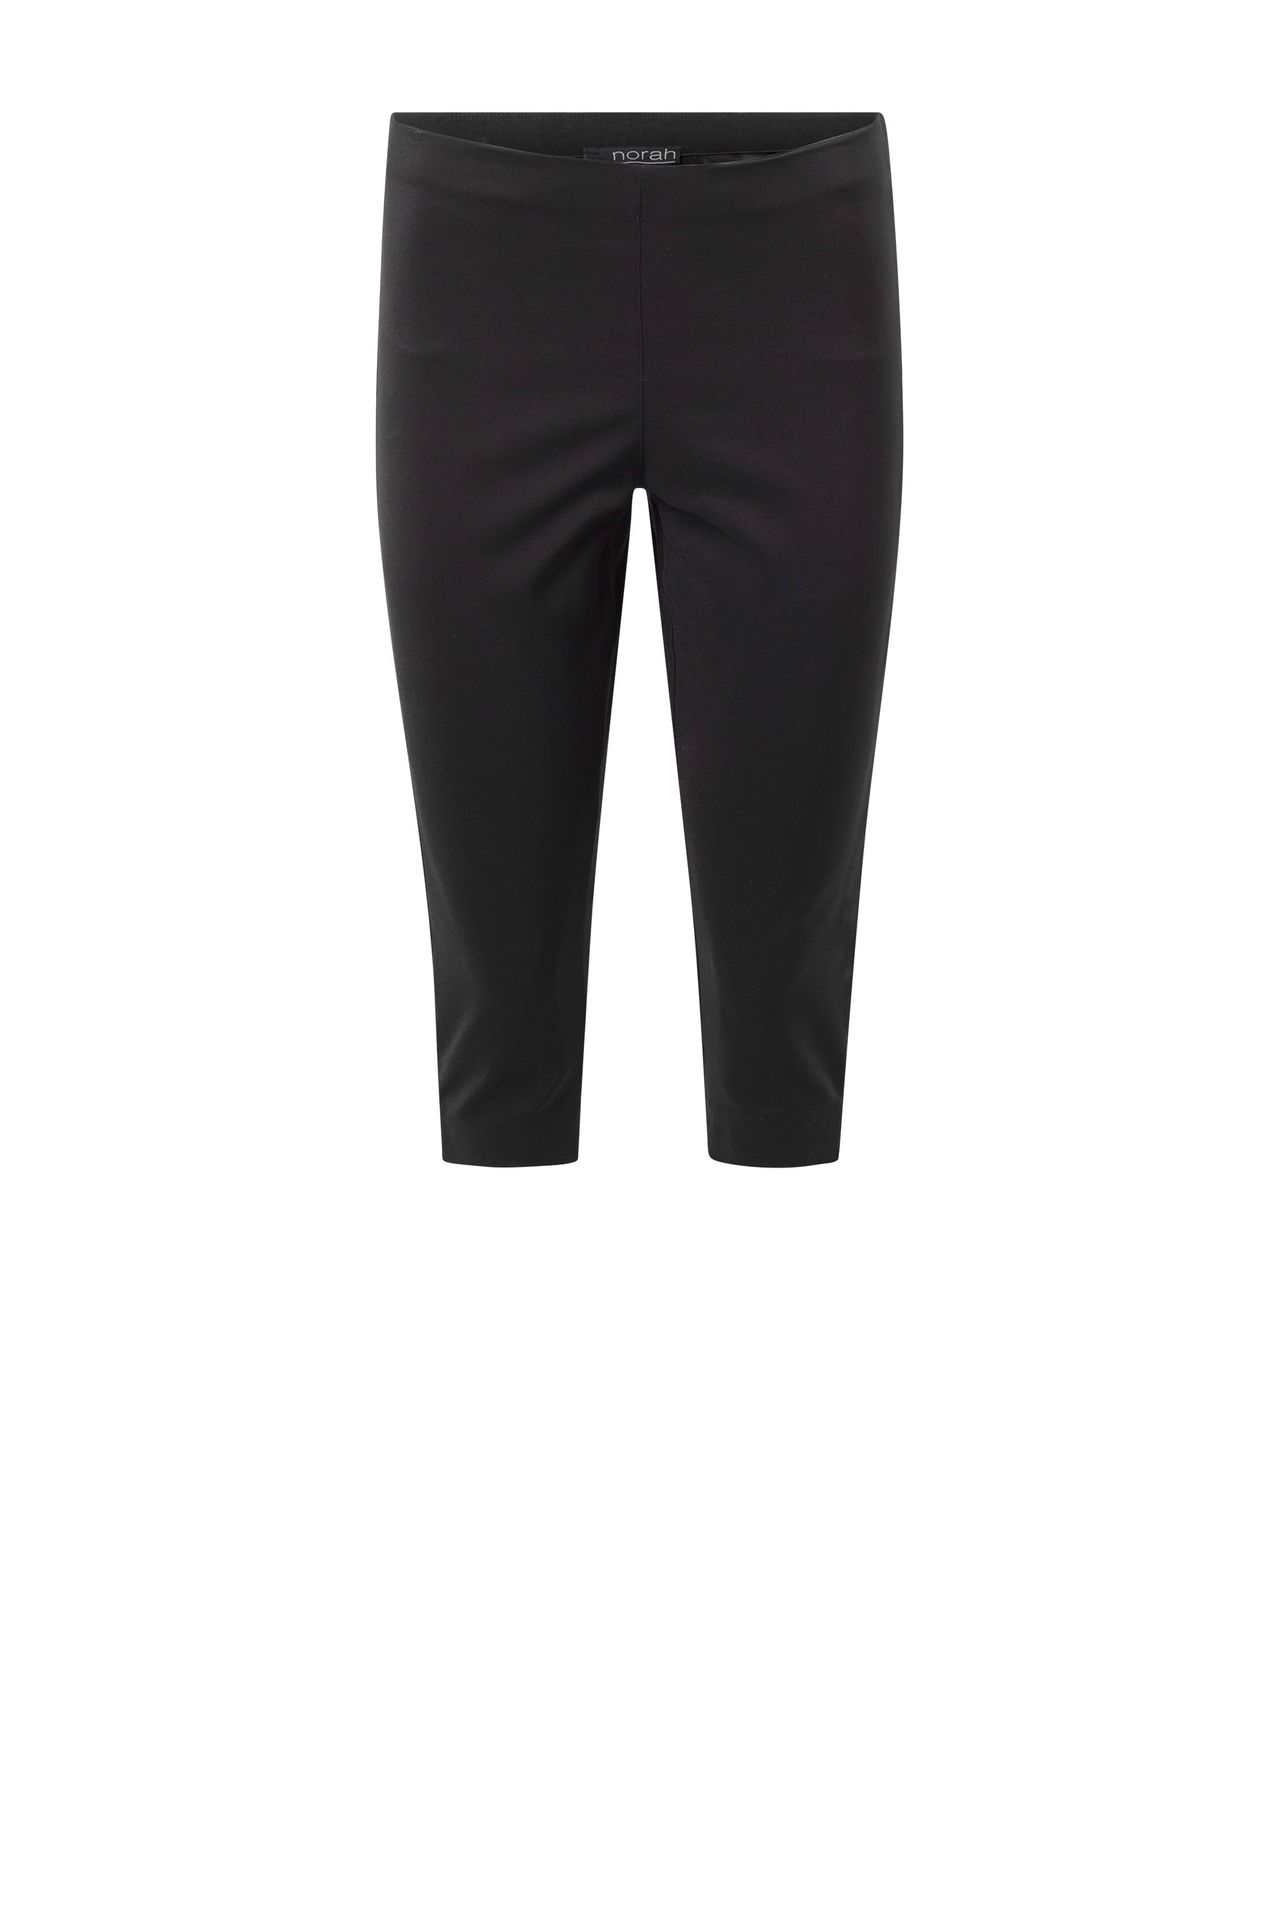 Norah Zwarte driekwart pantalon black 209510-001